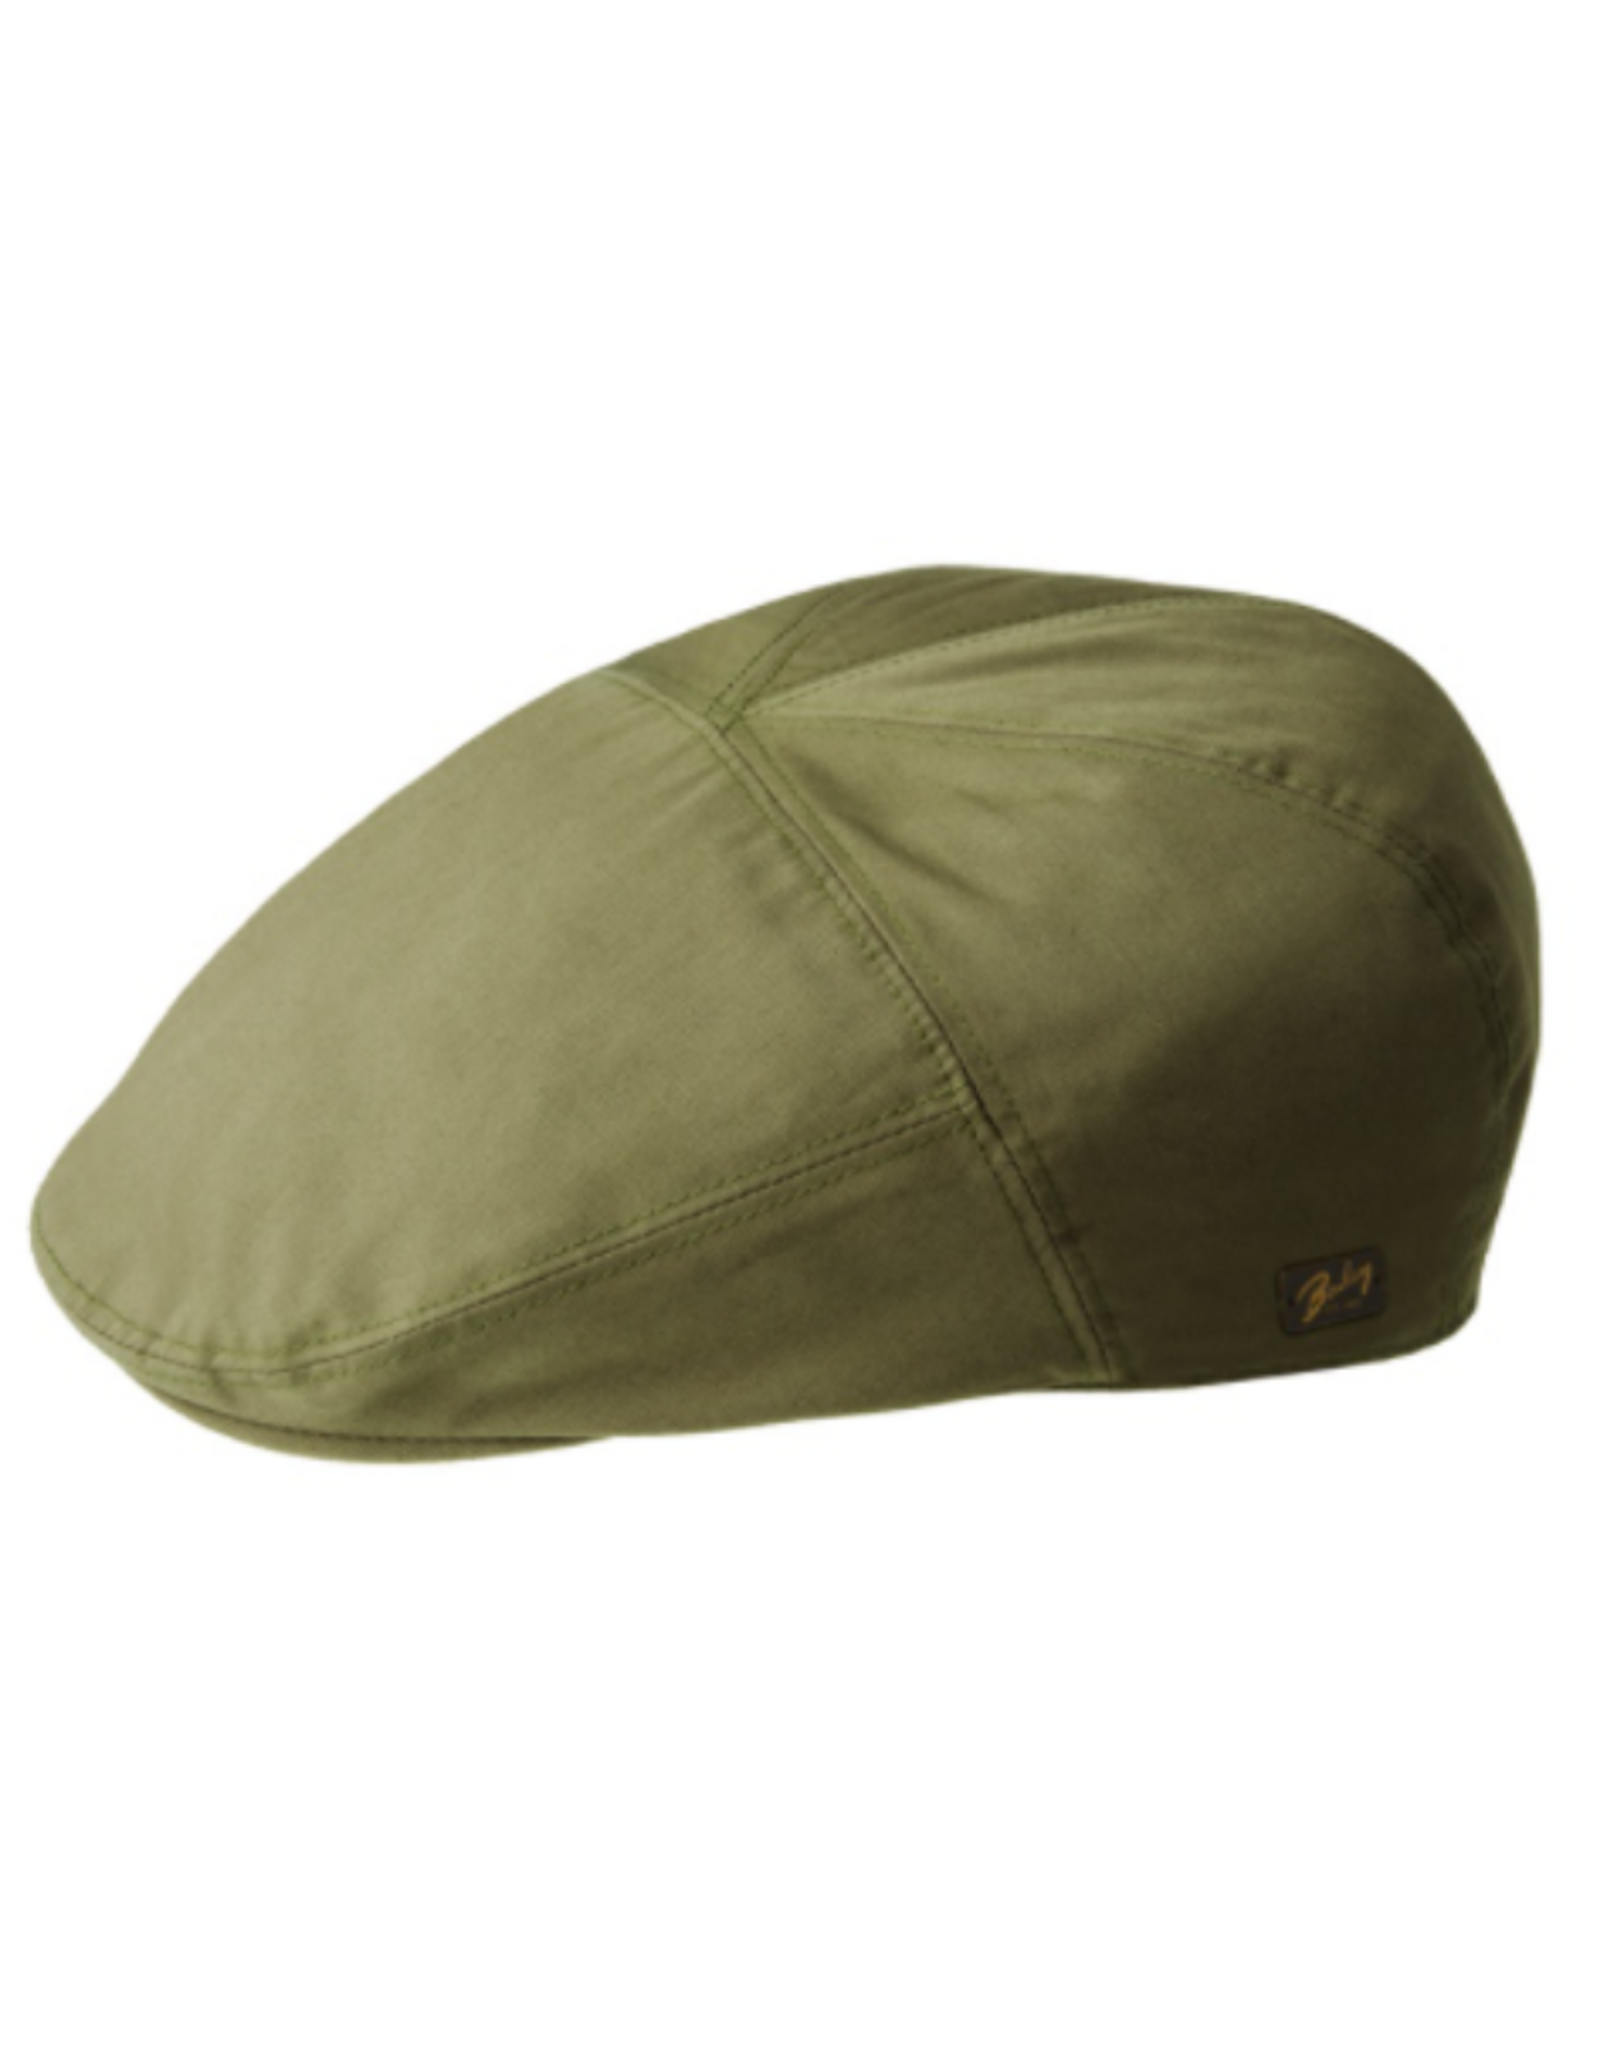 Bailey 1922 HAT-IVY CAP "GRAHAM"